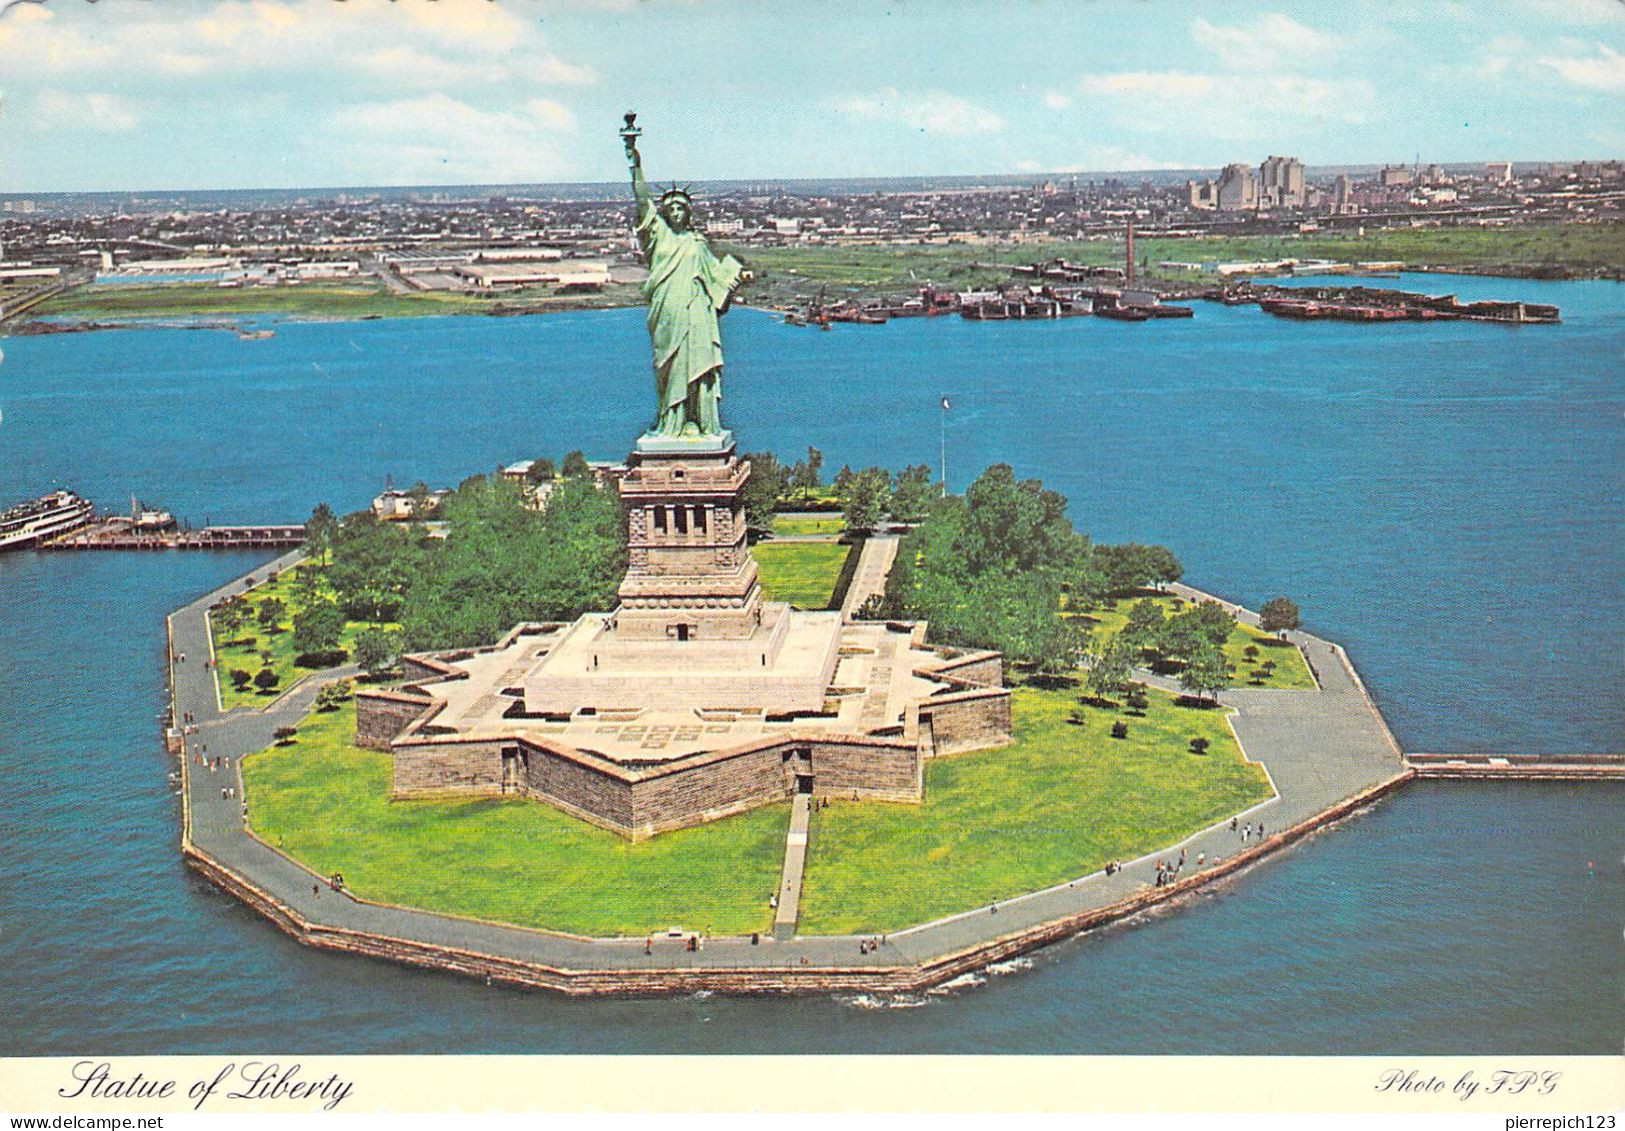 New York - Statue De La Liberté - Vrijheidsbeeld